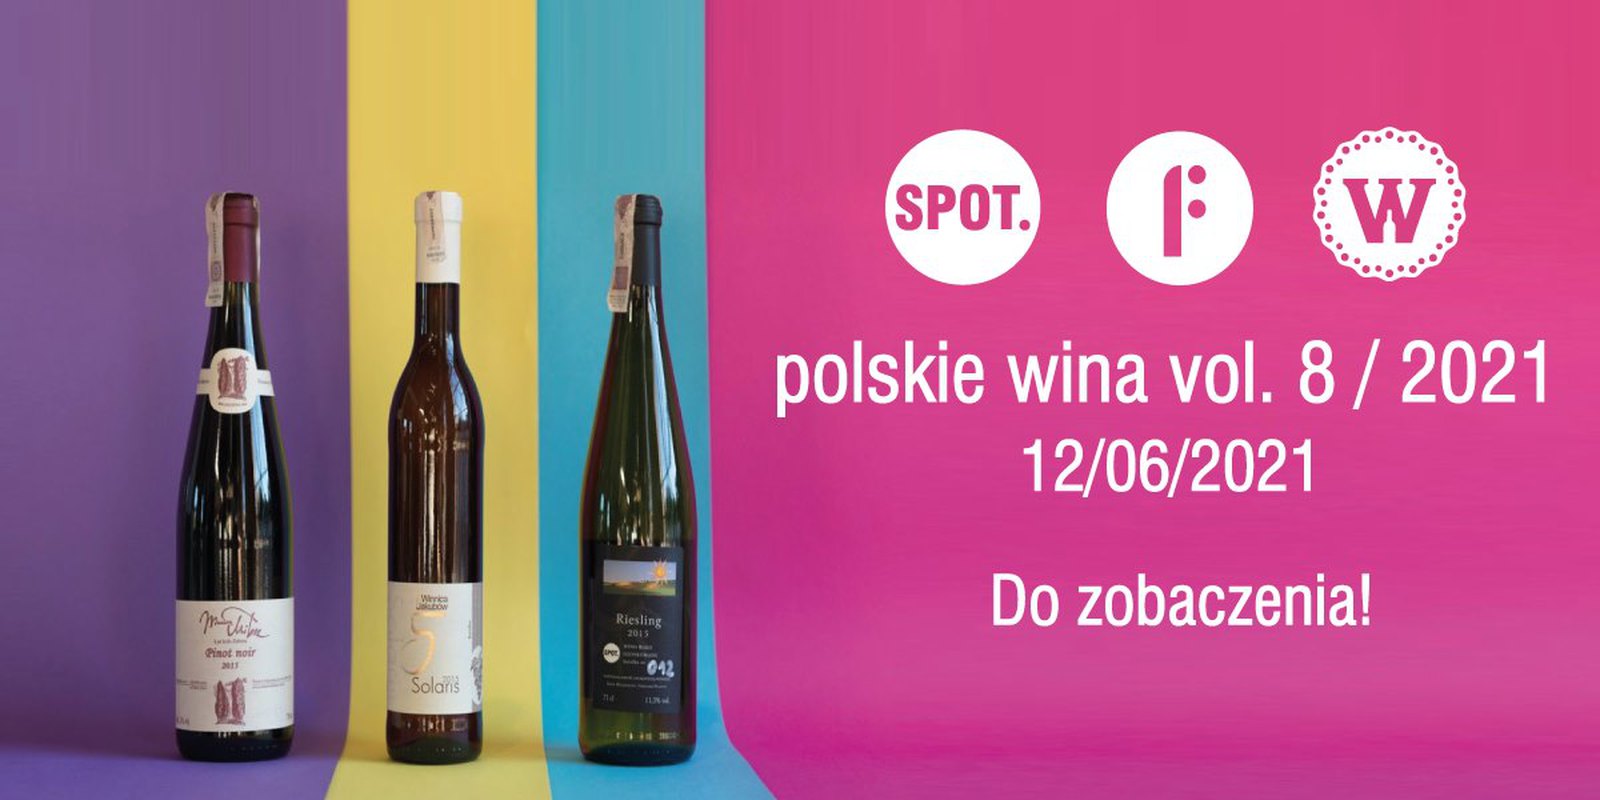 Polskie wina vol. 8 / 2021